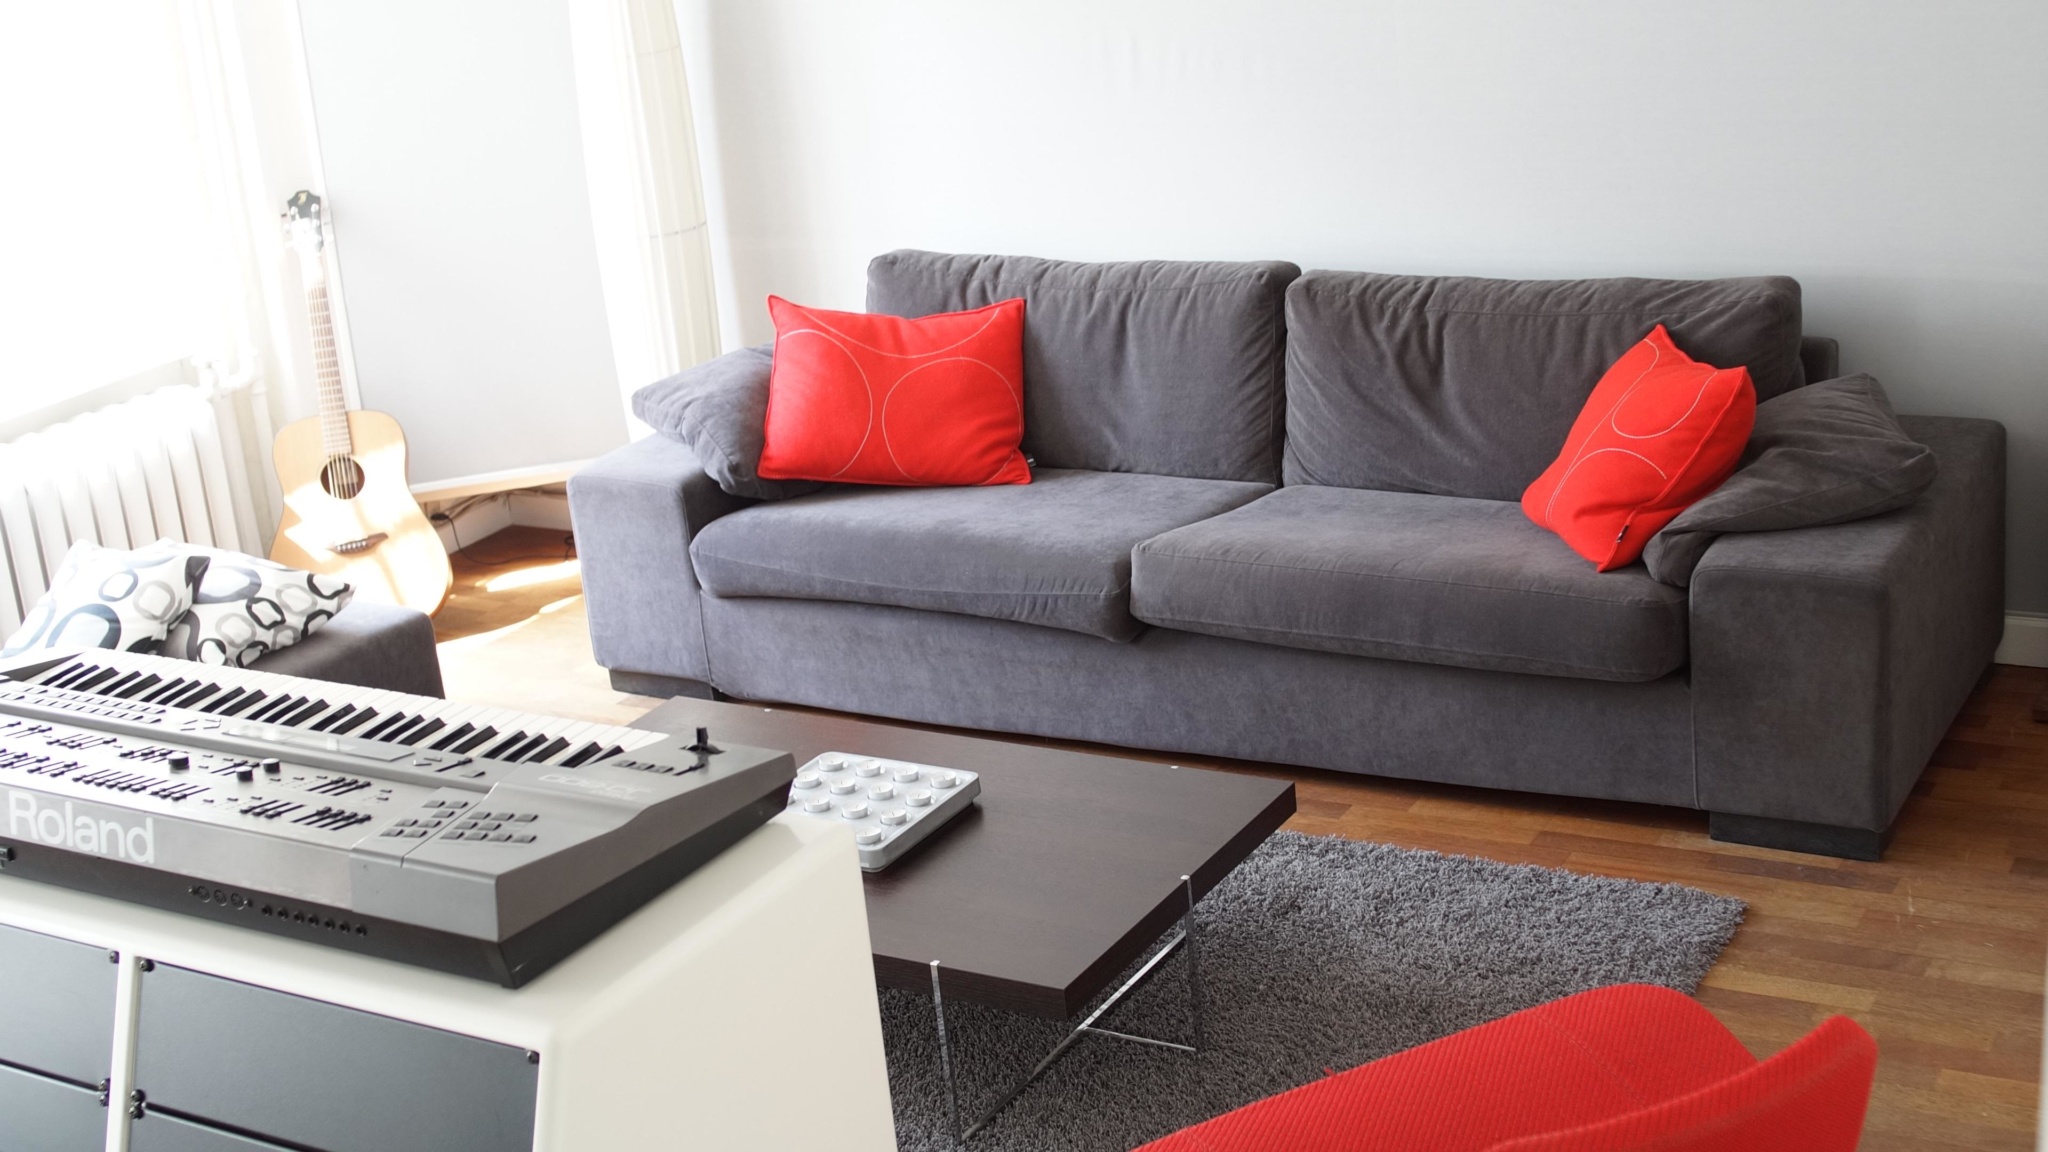 A multipurpose sofa